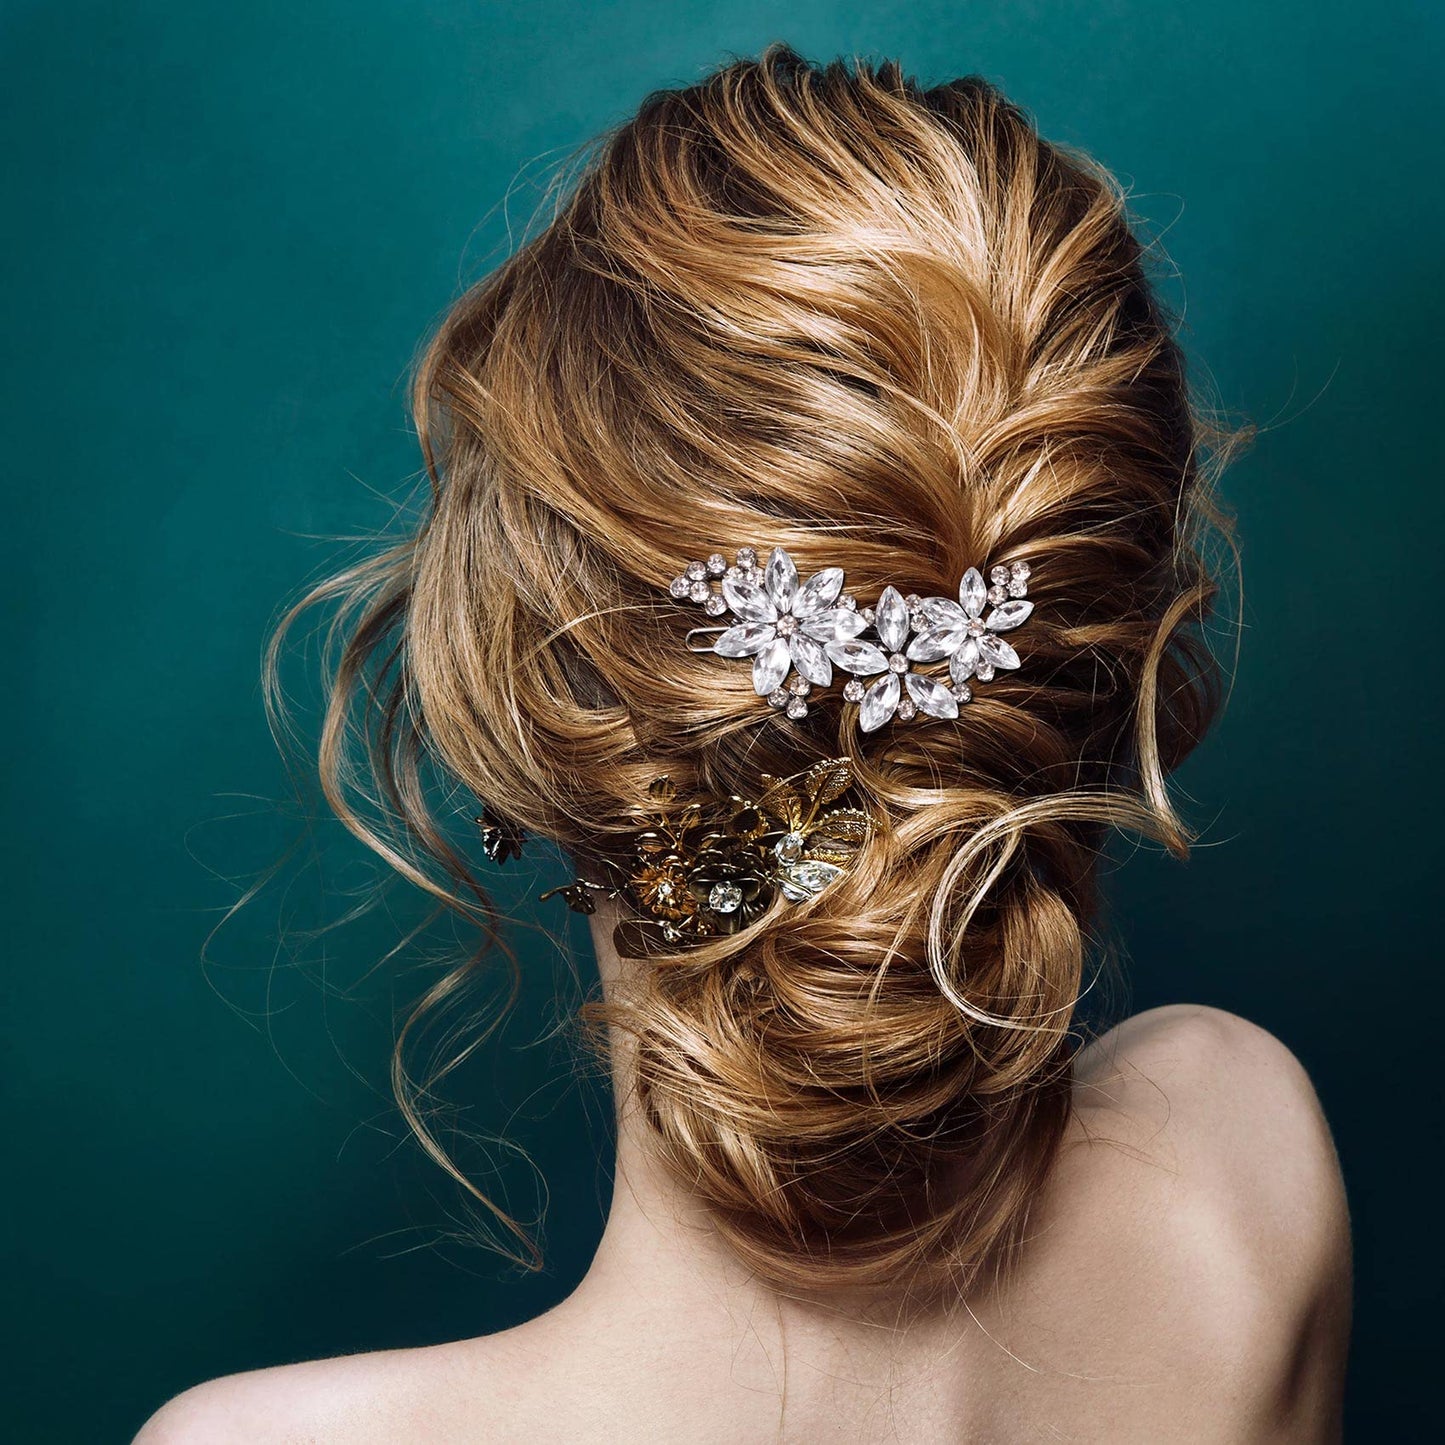 PAGOW 4Pcs Crystal Flower Bridal Hair Clips, Silver Bride Wedding Hair Accessories Hair Pins, Rhinestone Flower Wedding Headpiece for Brides Women Girls